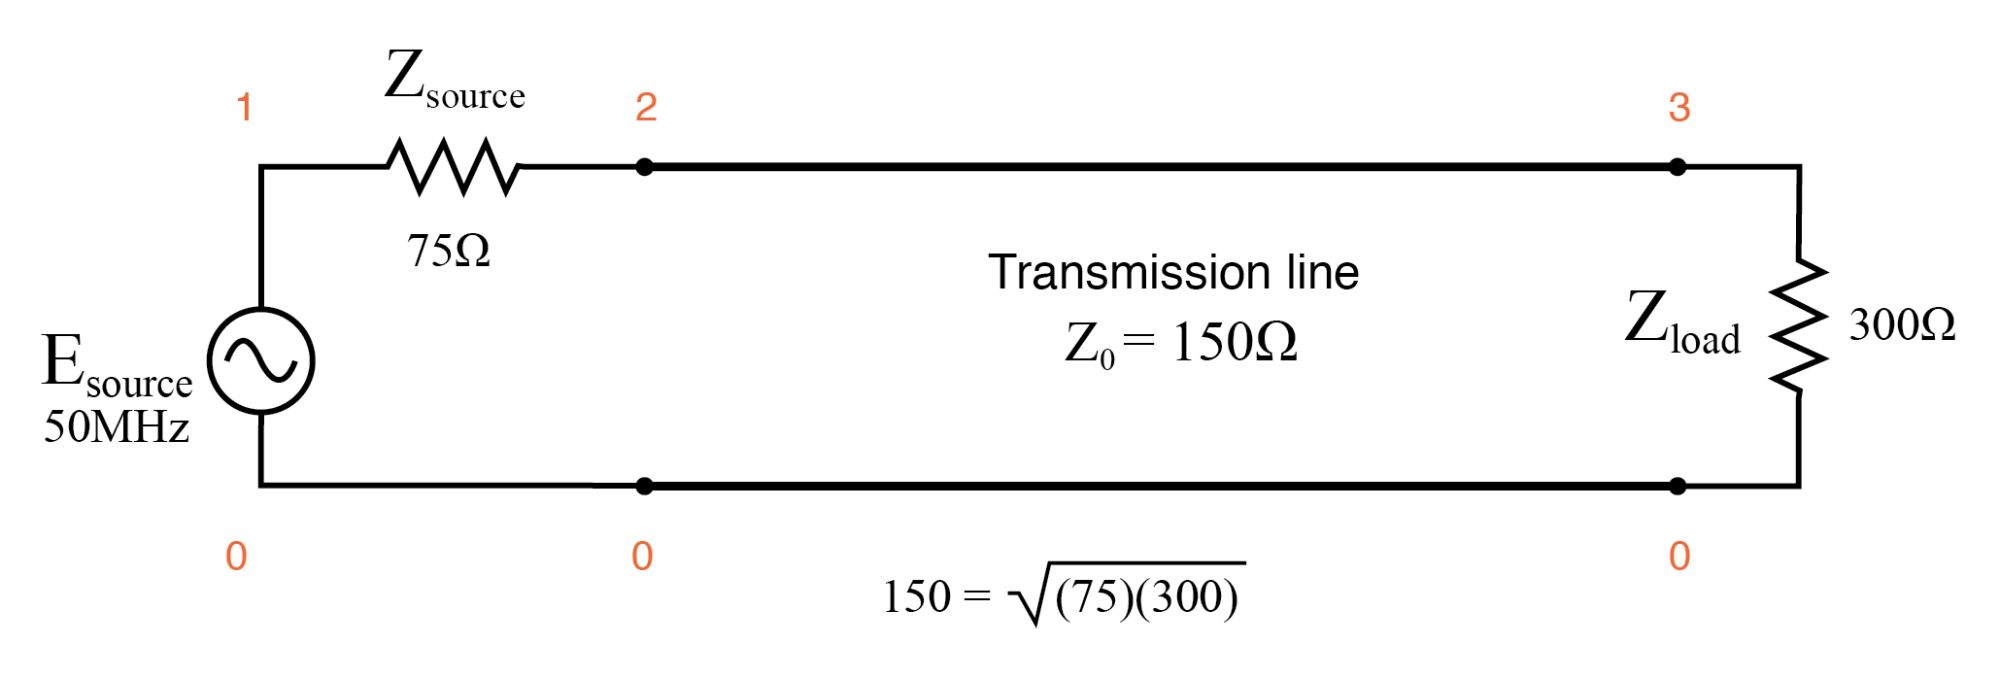 150Ω传输线的四分之一波段匹配75Ω源至300Ω负载。